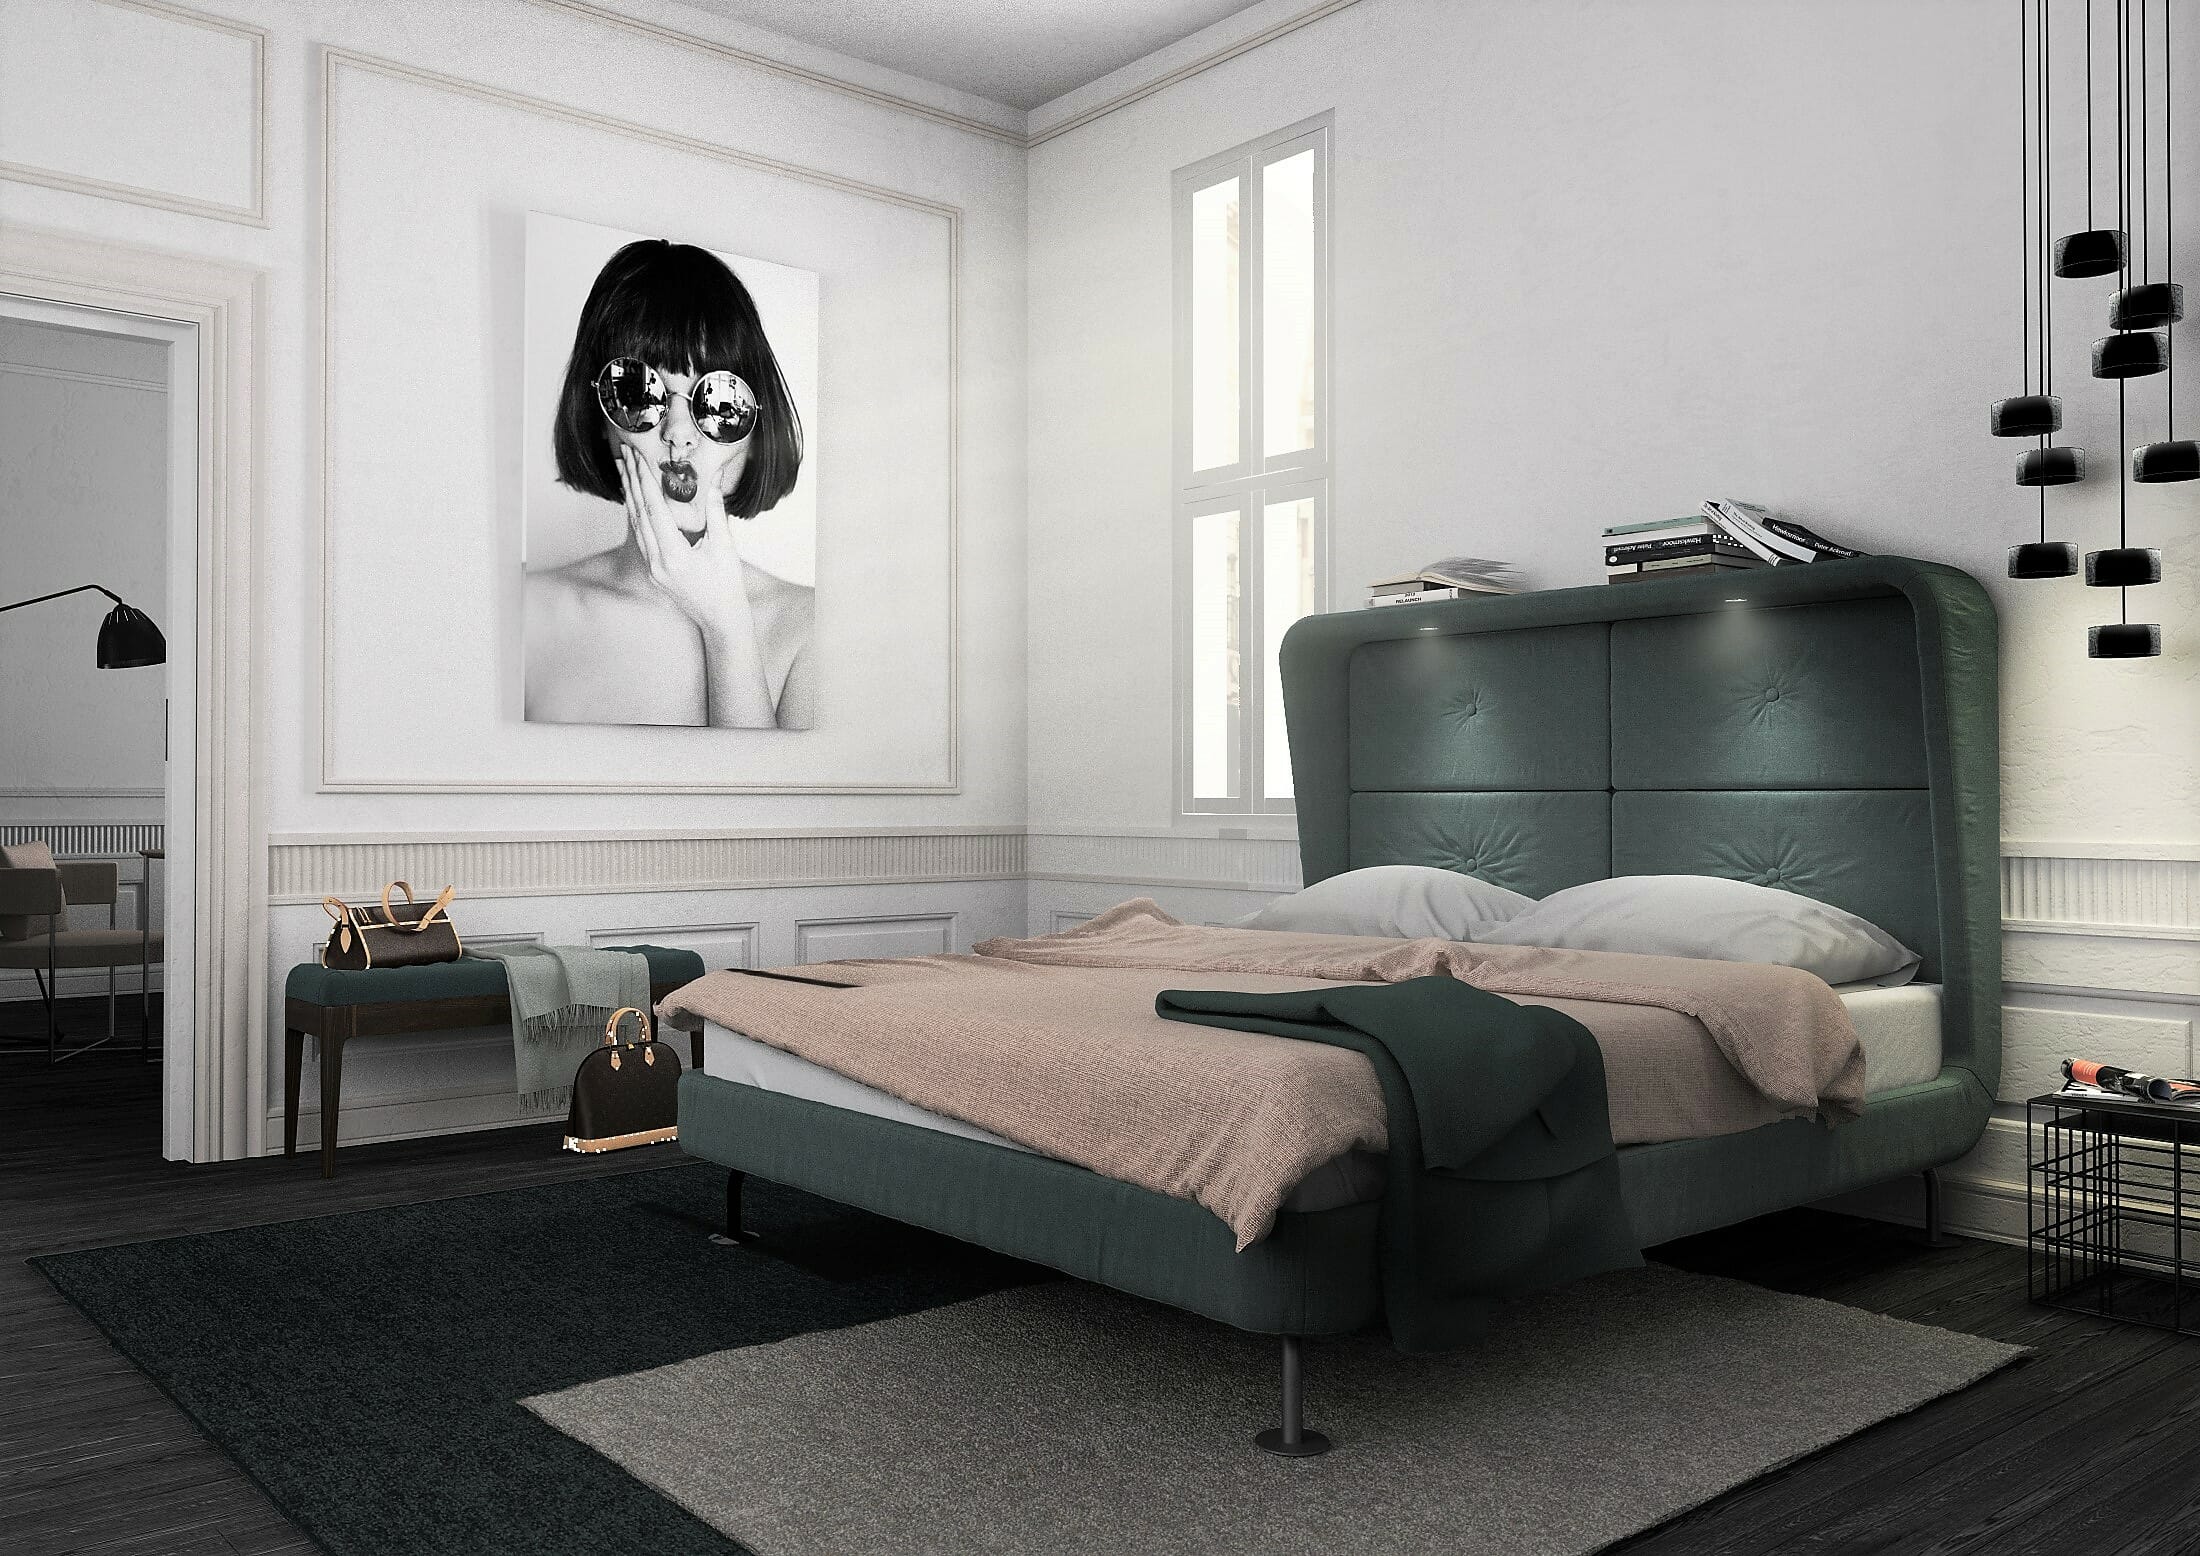 French chic master bedroom design by Decorilla designer Christian G